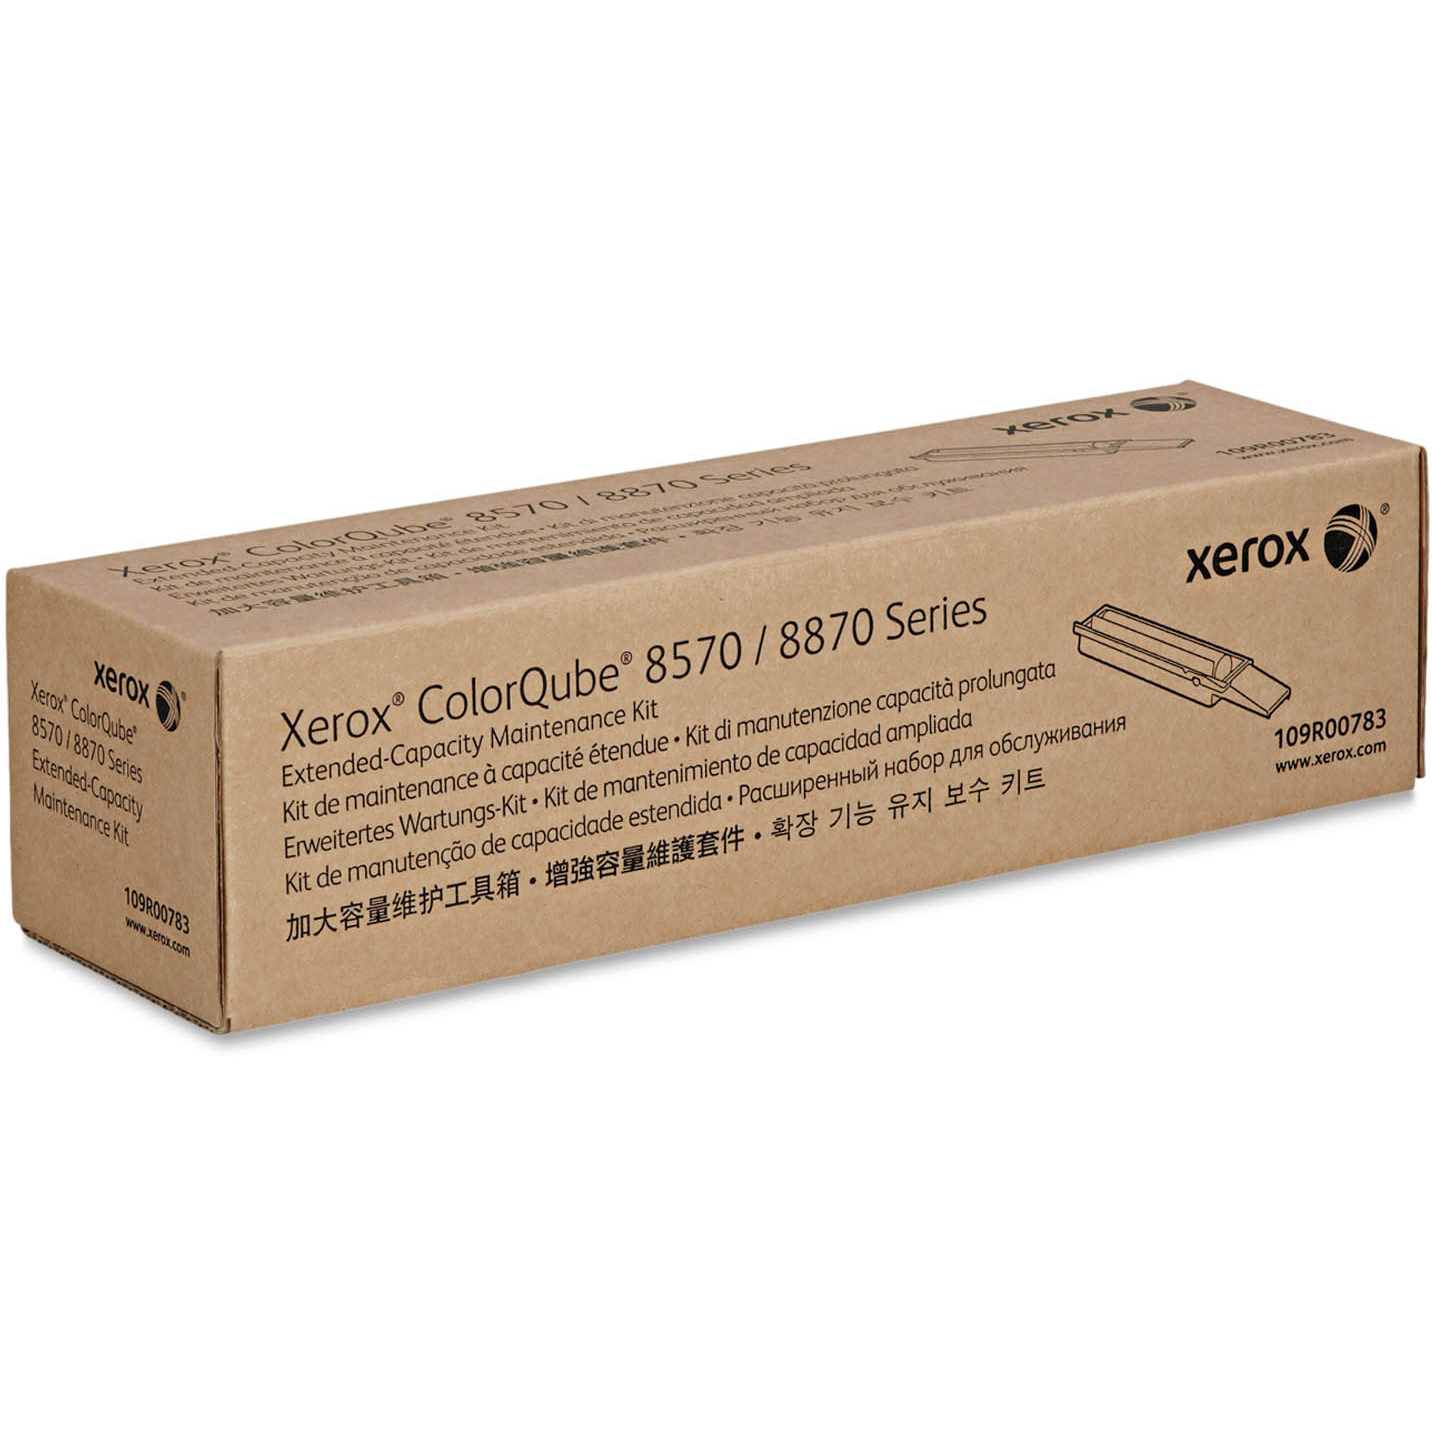 Original Xerox 109R00783 Extended Capacity Maintenance Kit (109R00783)